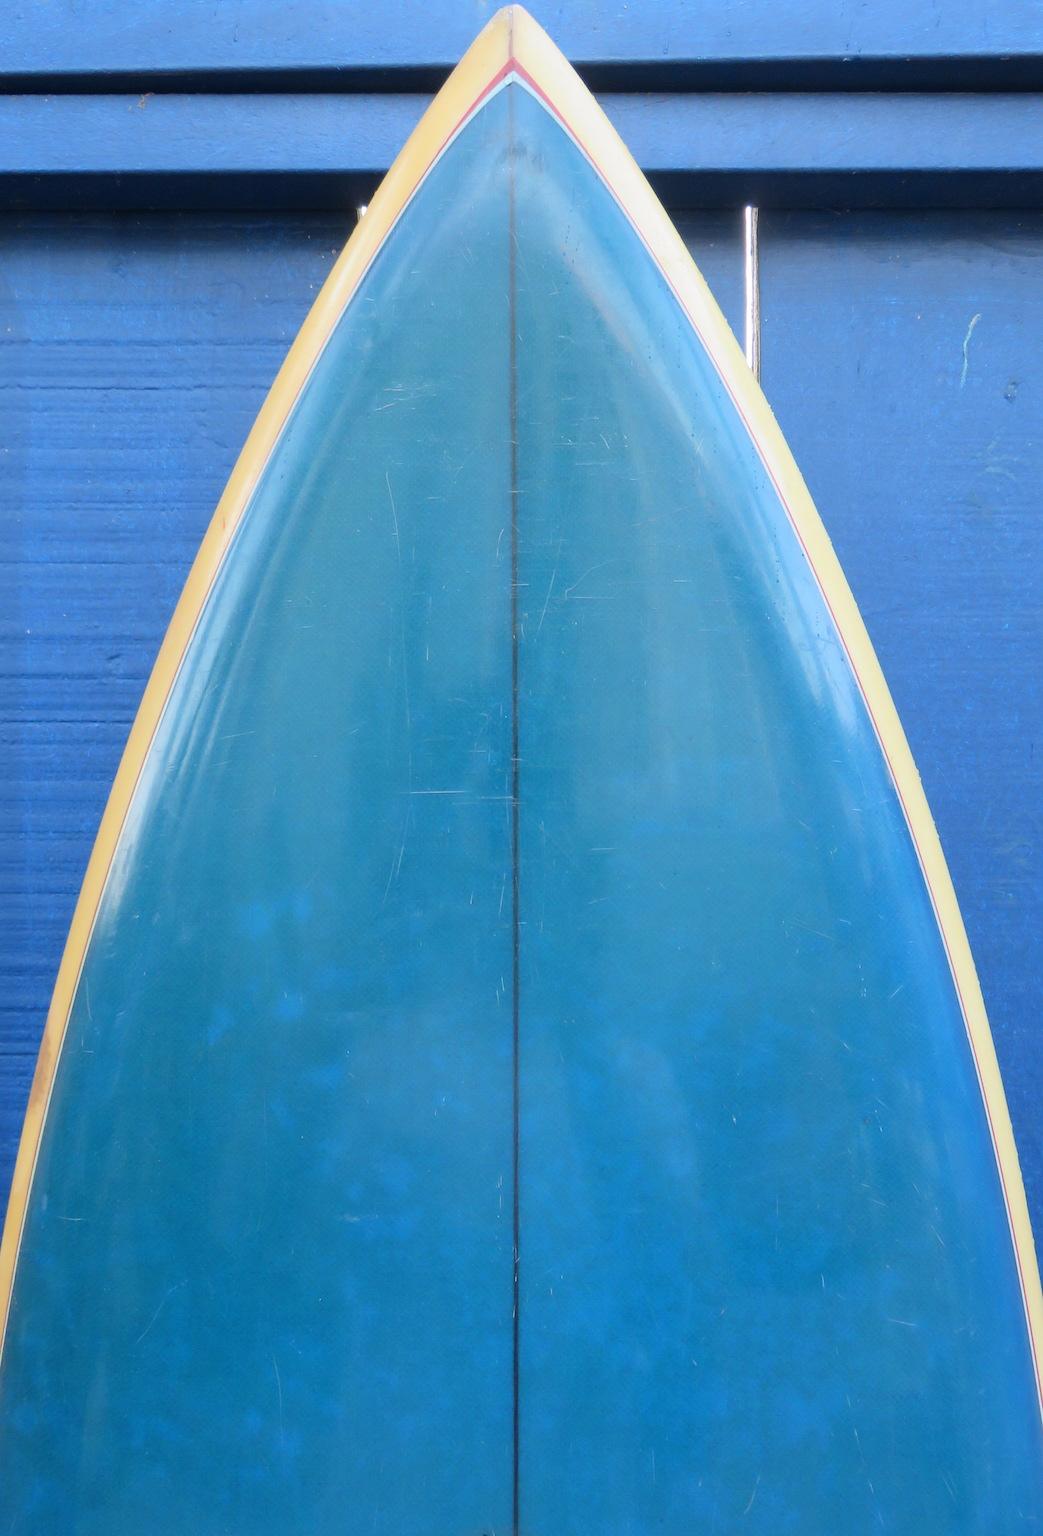 vintage single fin surfboards for sale